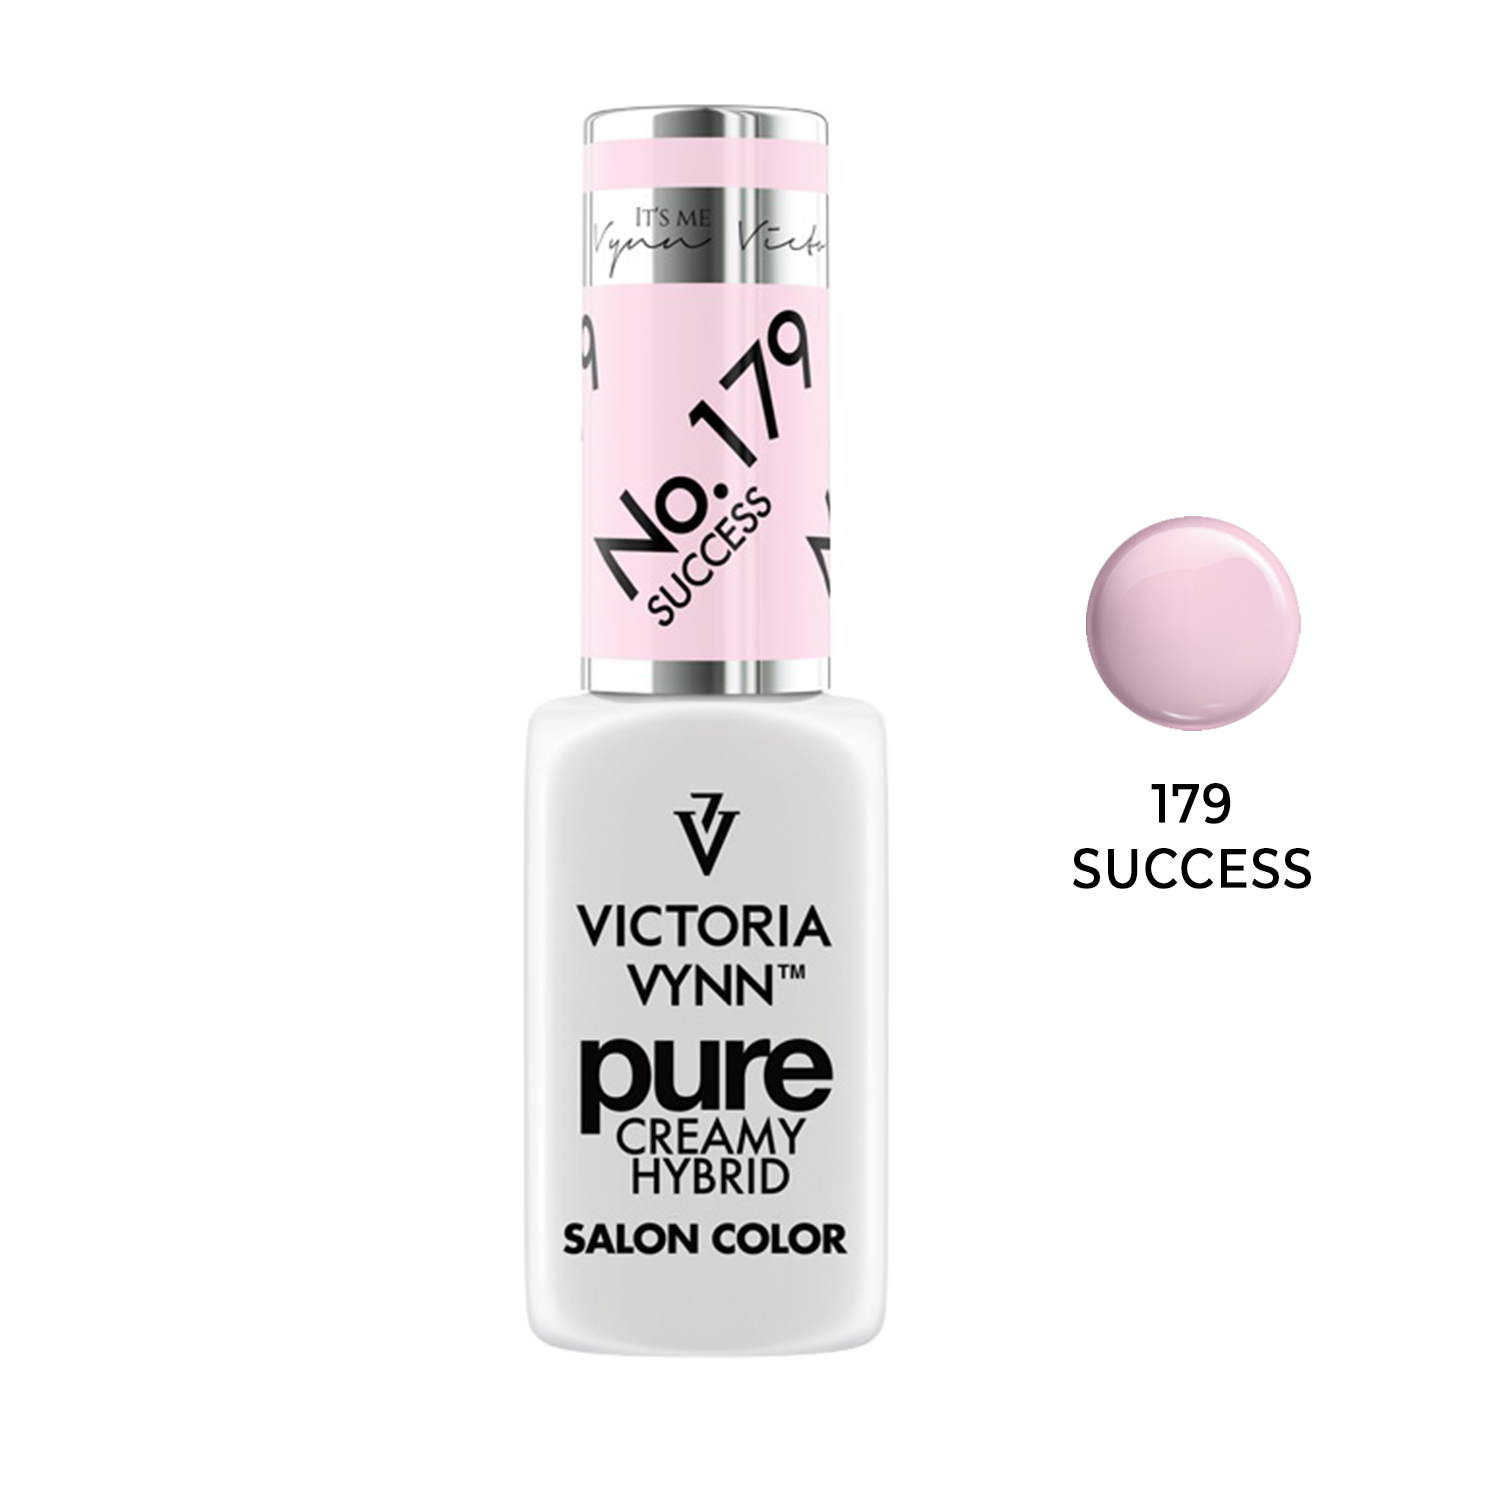 Victoria Vynn Pure Creamy Hybrid Success 179 8ml pink gel polish UK Northern Ireland shop